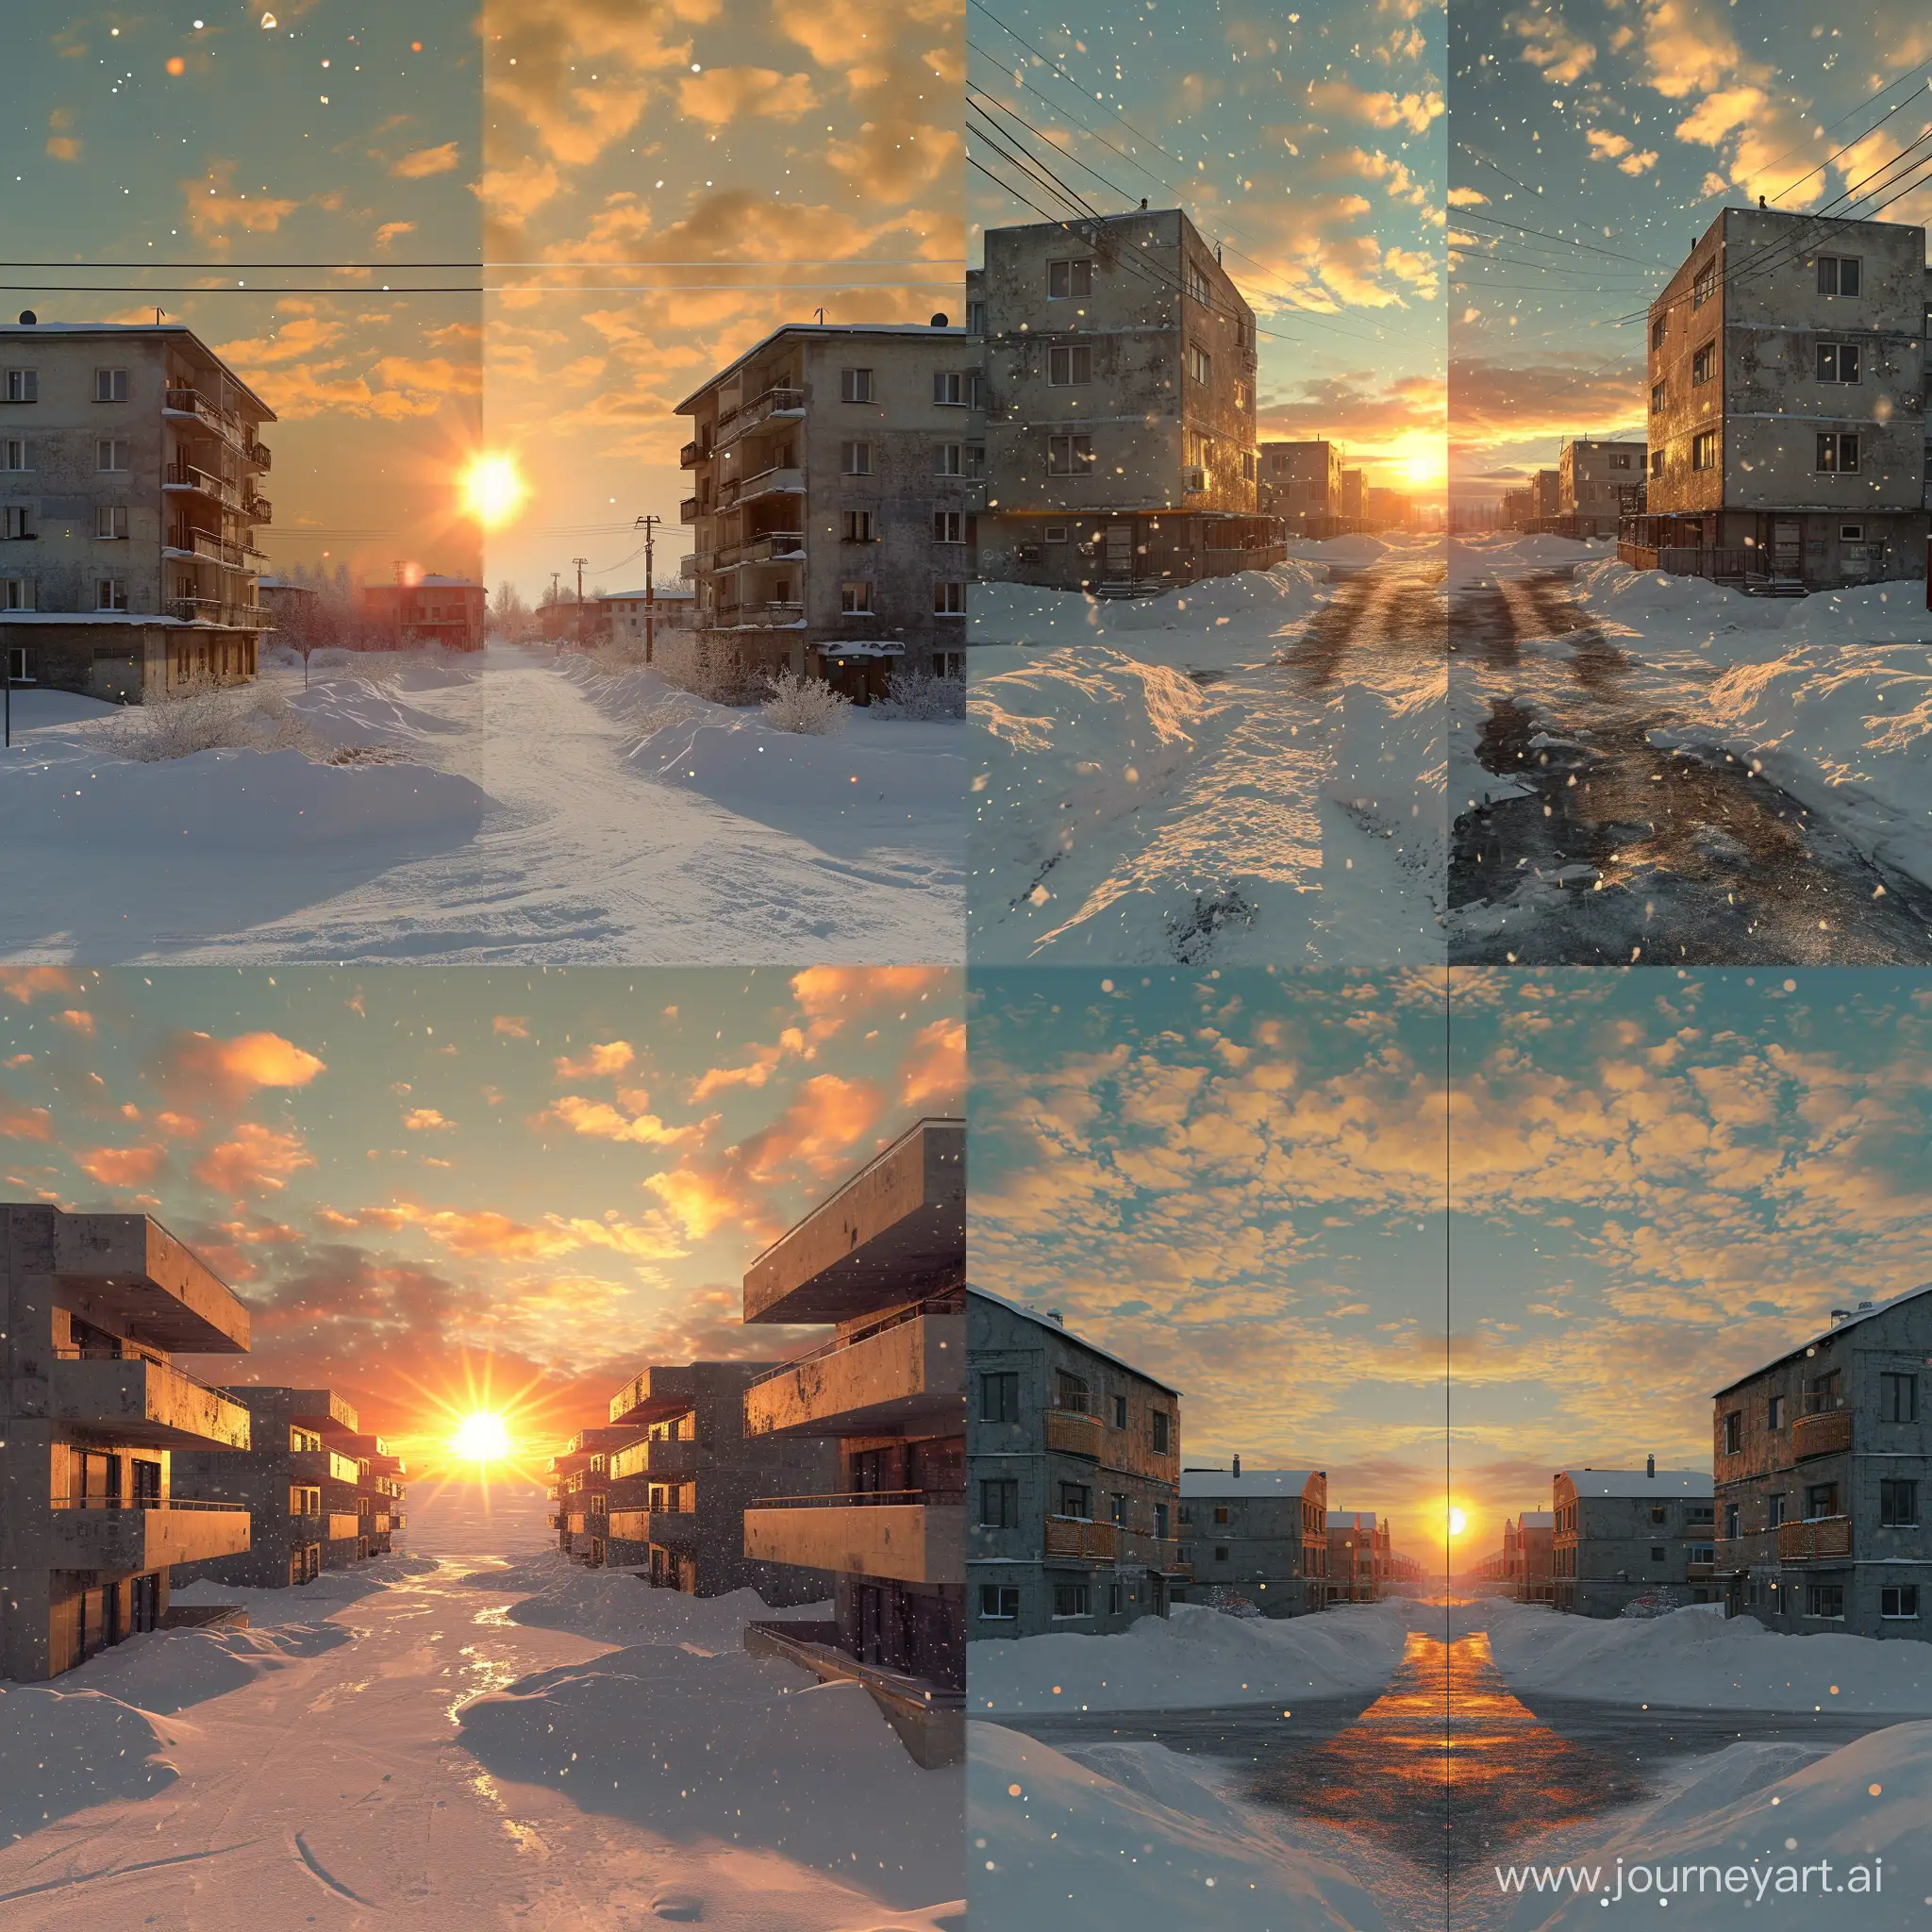 Urban-Winter-Landscape-Cinematic-Scenes-of-Snowy-Streets